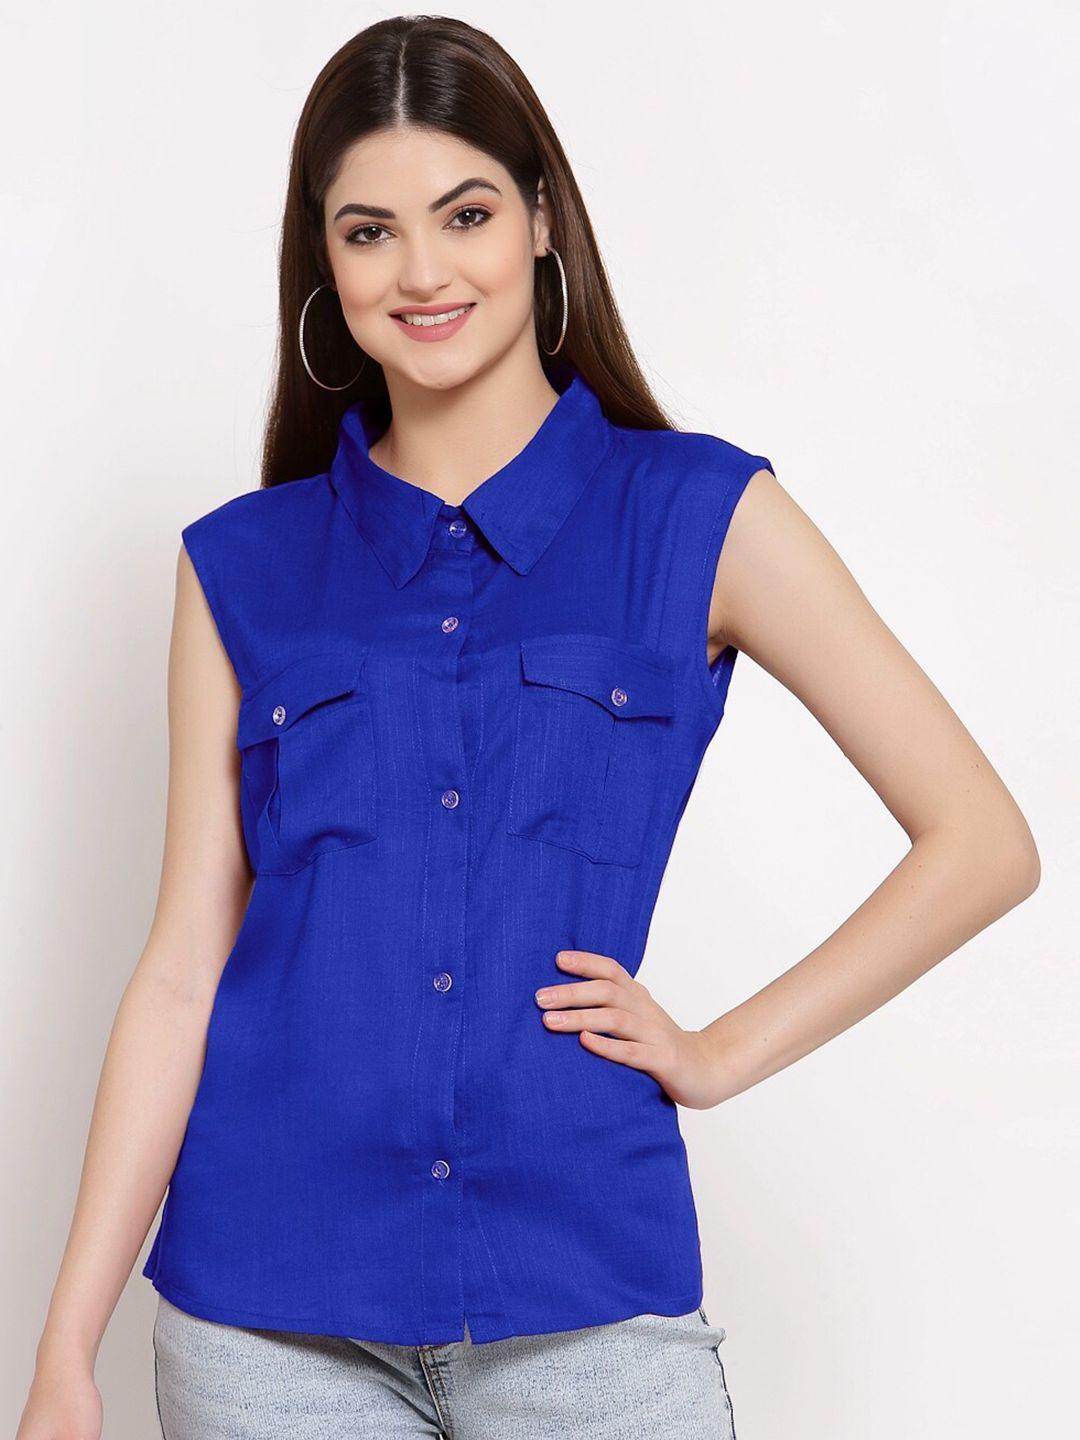 patrorna women blue comfort casual shirt